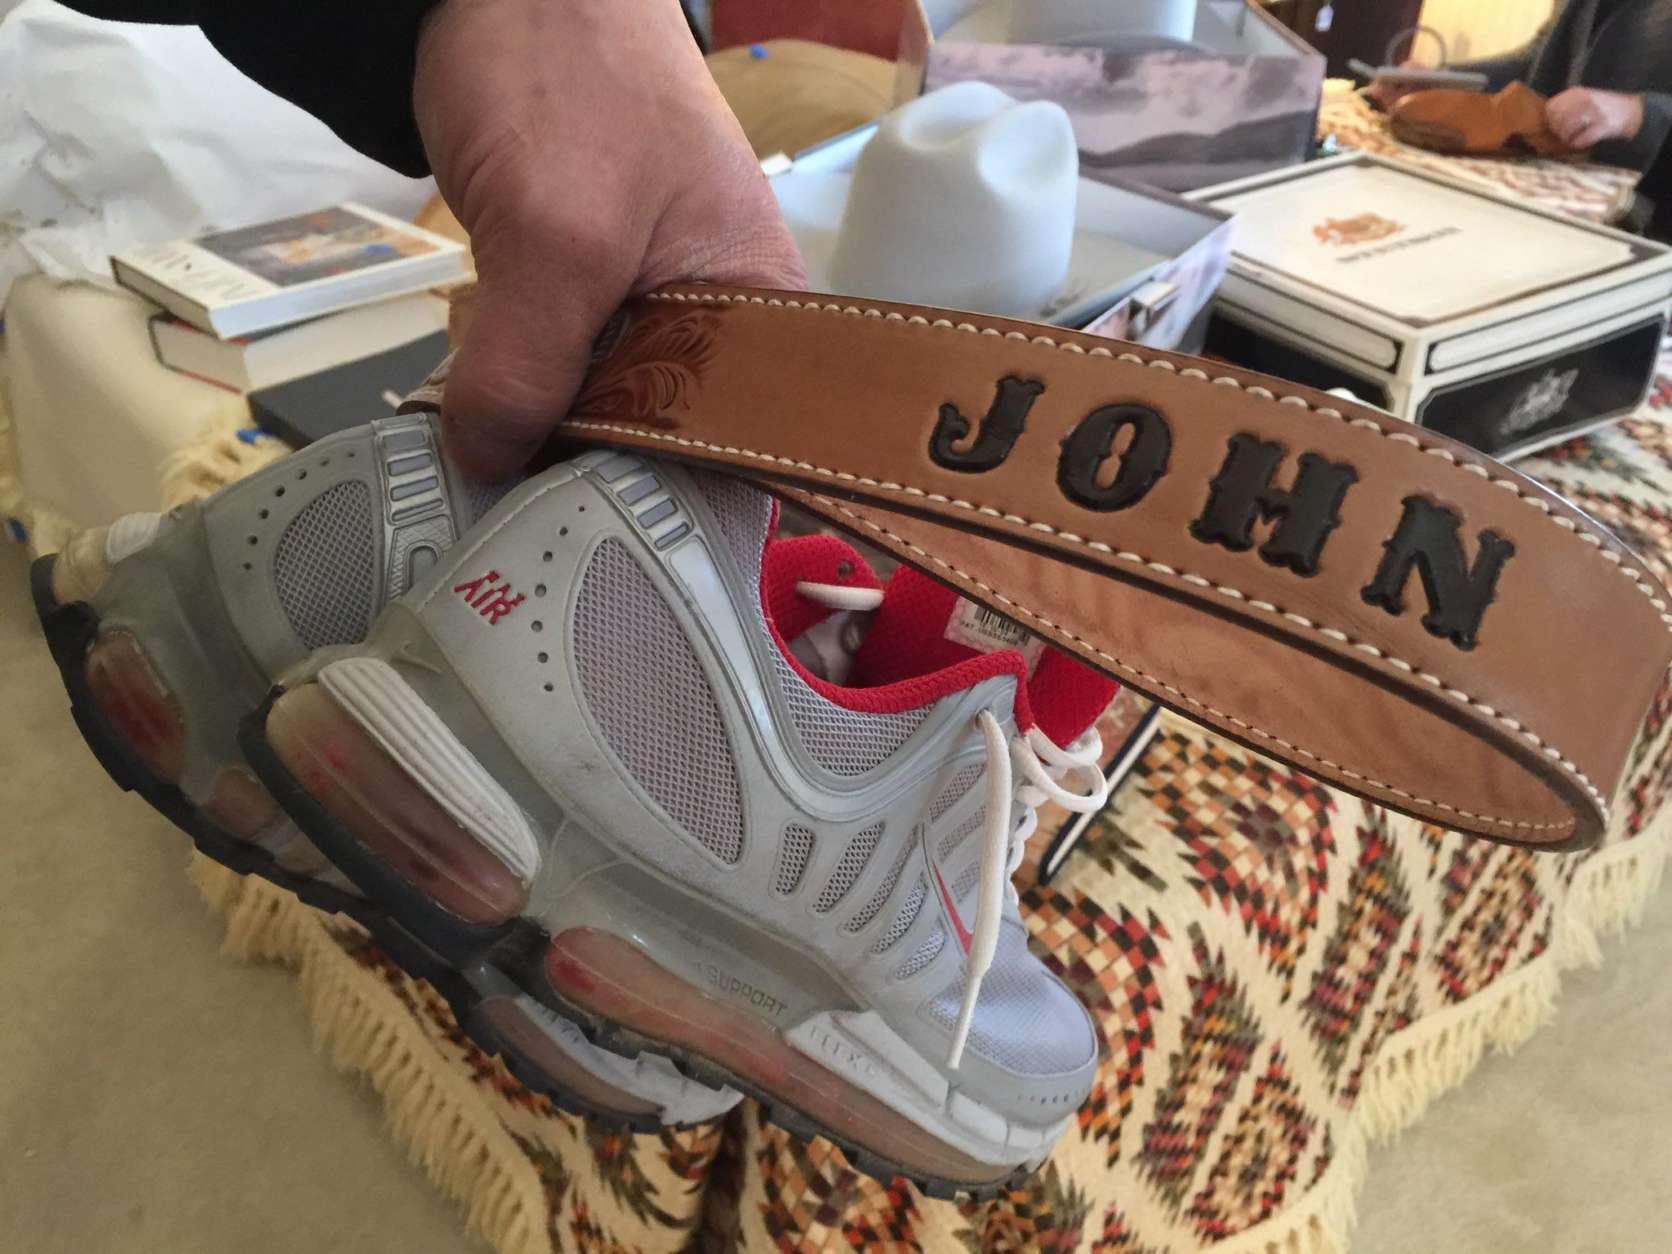 A belt and sneakers at John Glenn's estate sale. (WTOP/Kristi King)